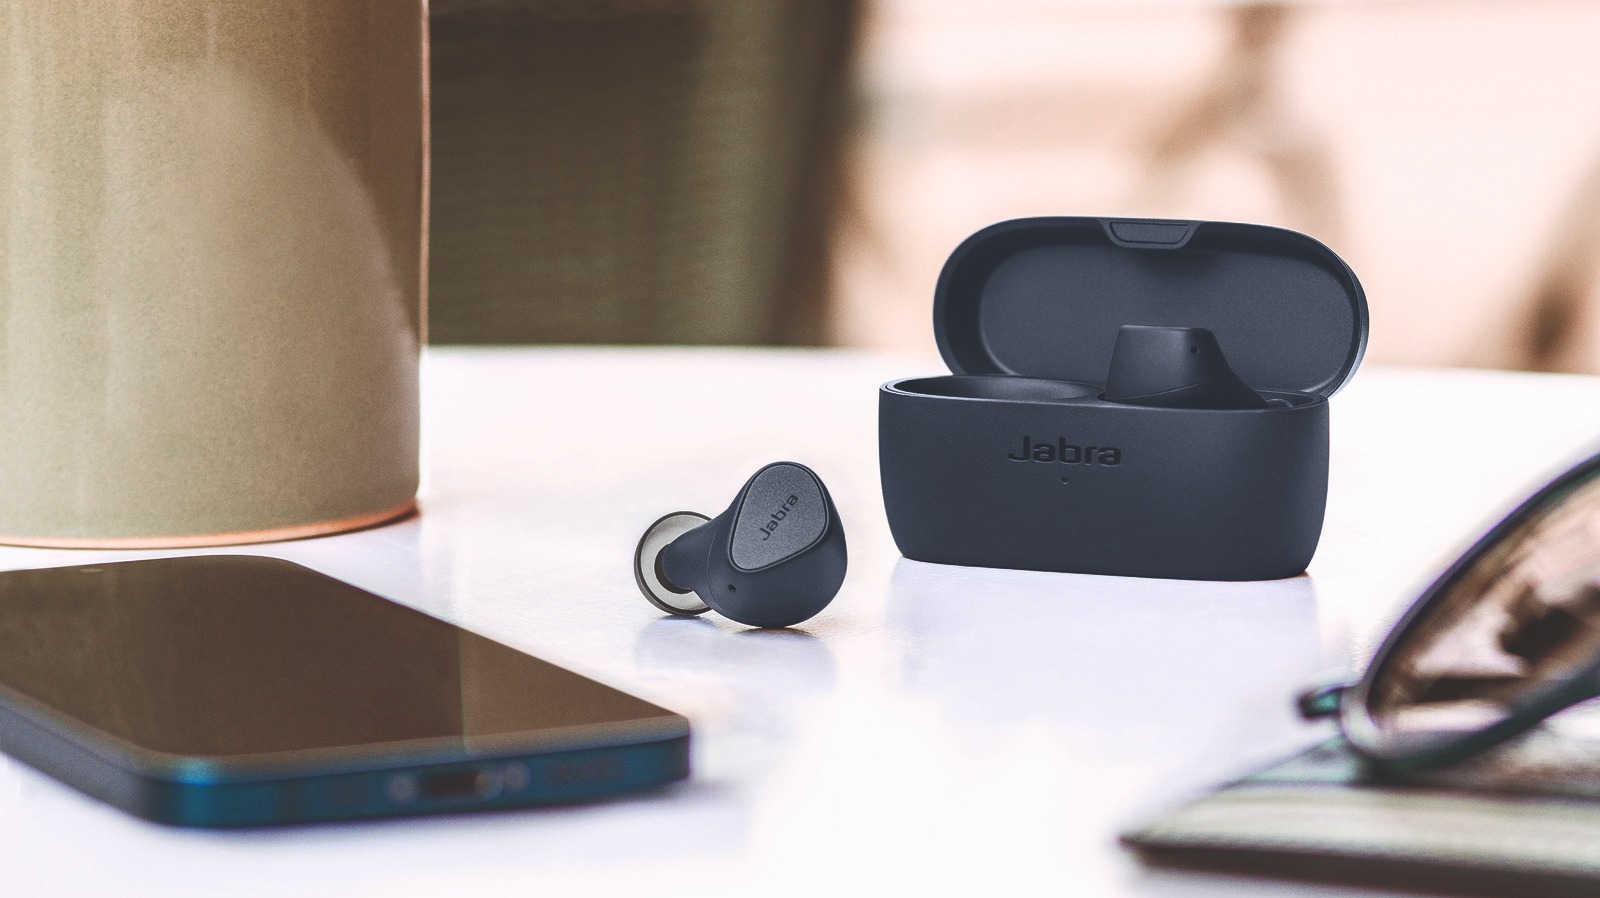 Jabra Elite 4 True Wireless Earbuds